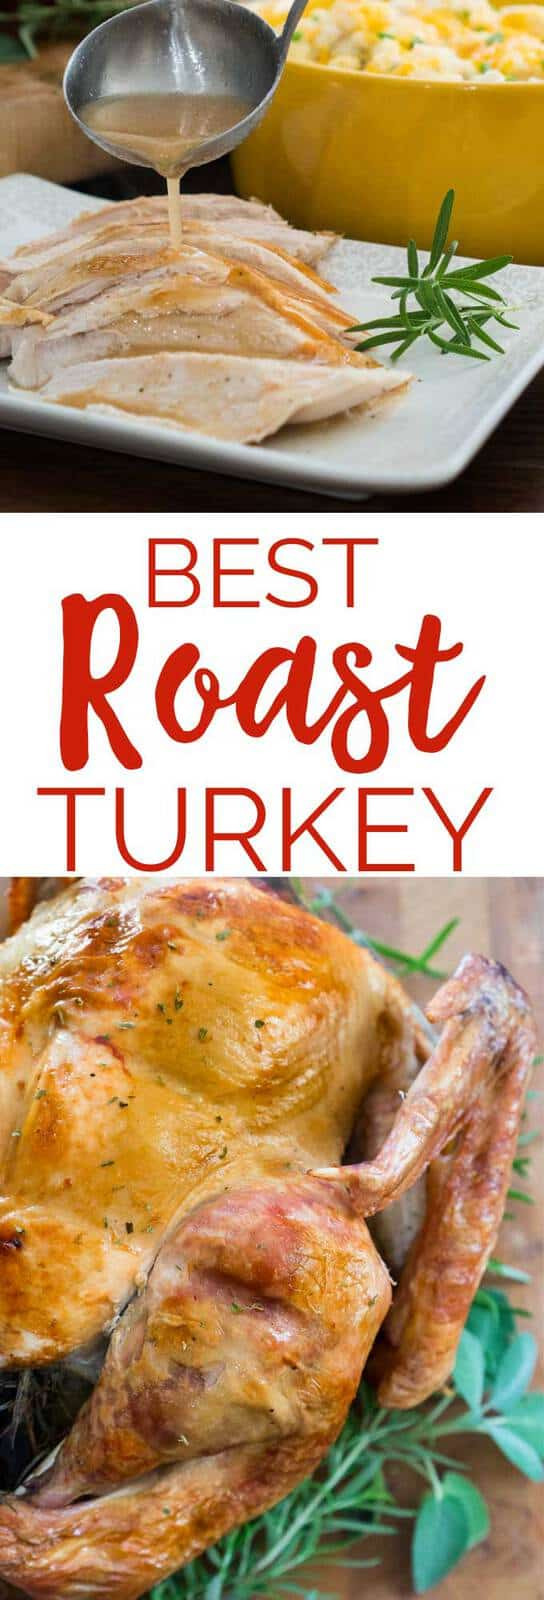 Best Roast Turkey Recipe For Thanksgiving
 Best Roast Turkey Recipe No Fail Turkey for Thanksgiving